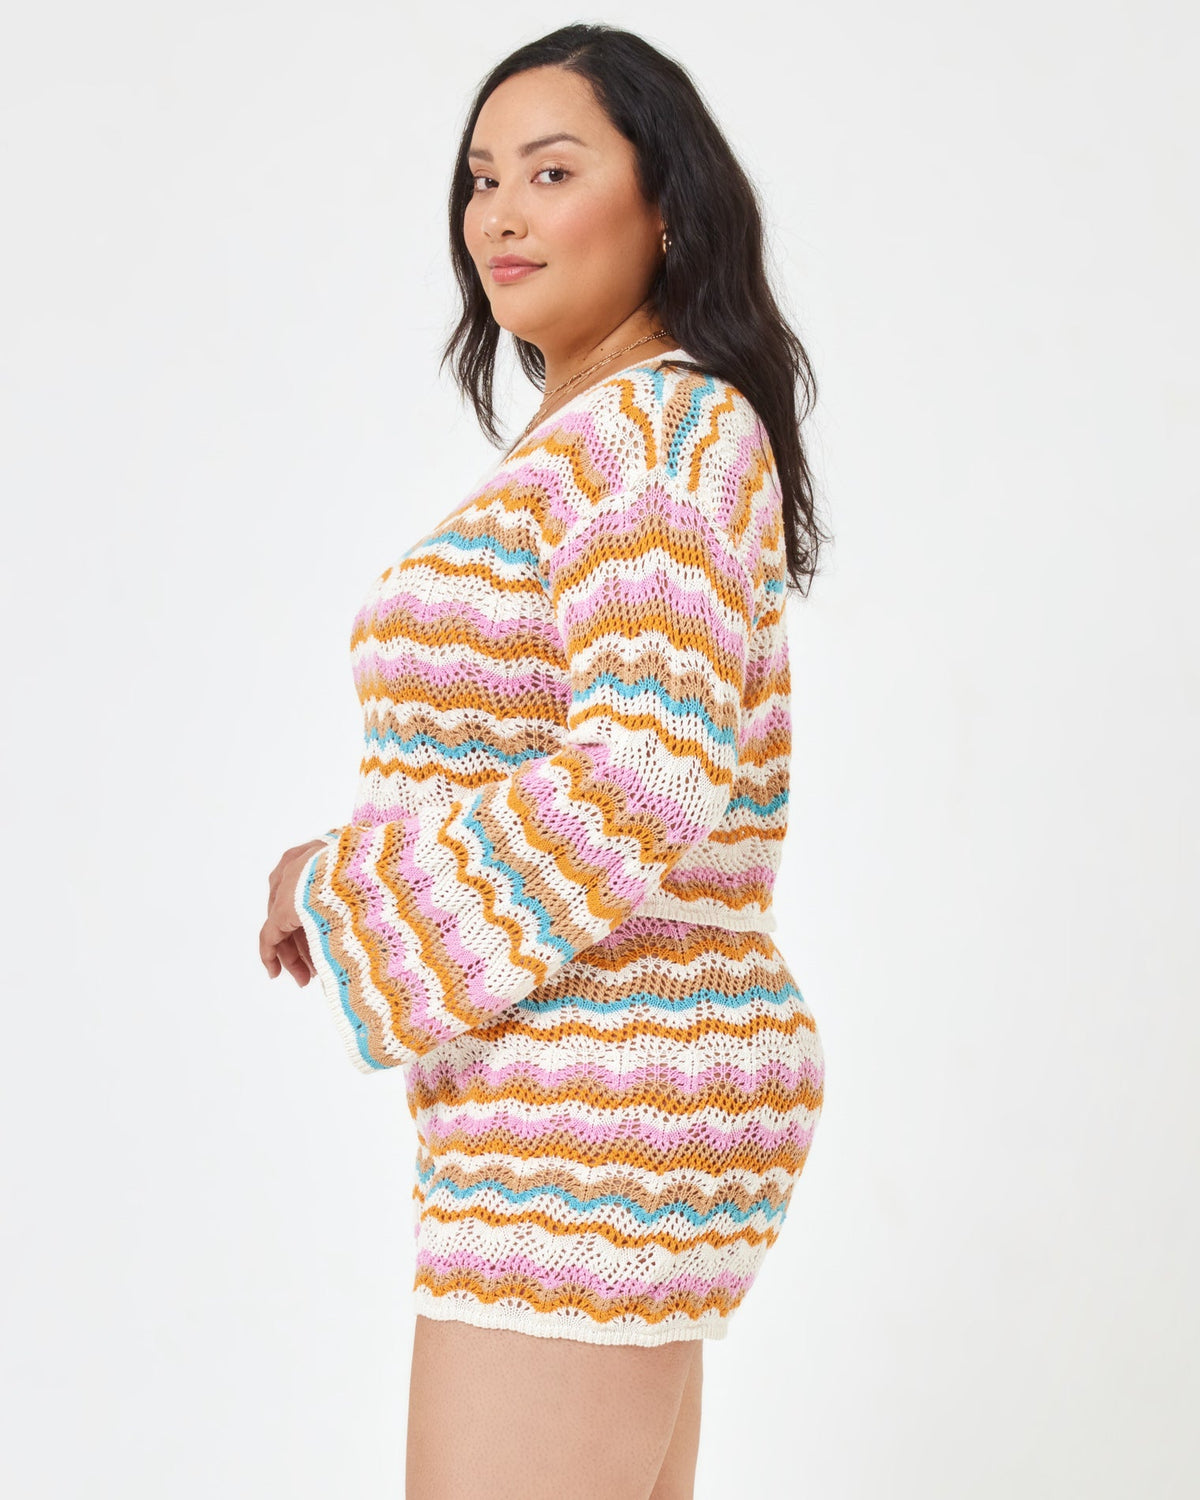 Sun Ray Sweater Daybreak Stripe | Model: Bianca (size: XL)